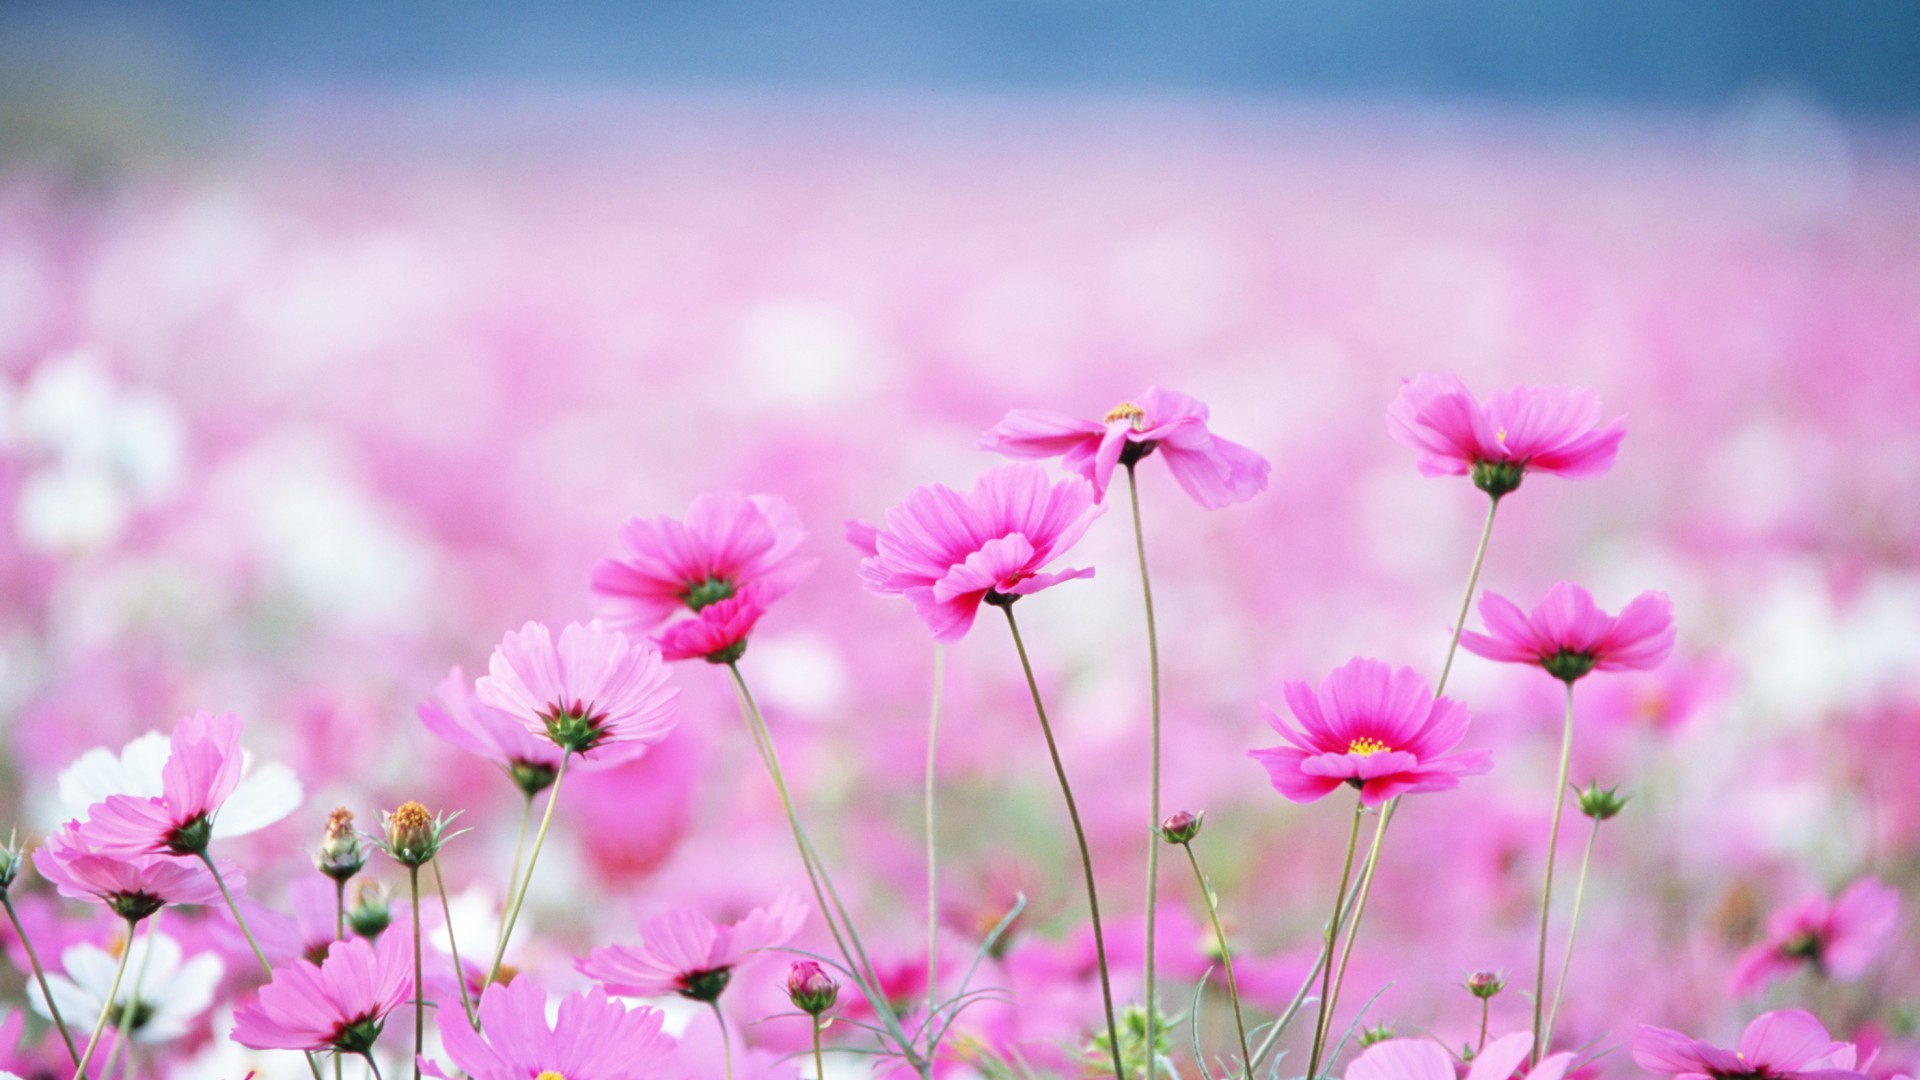 Wildflowers, HD, 4k wallpaper, field, pink, flower (horizontal)